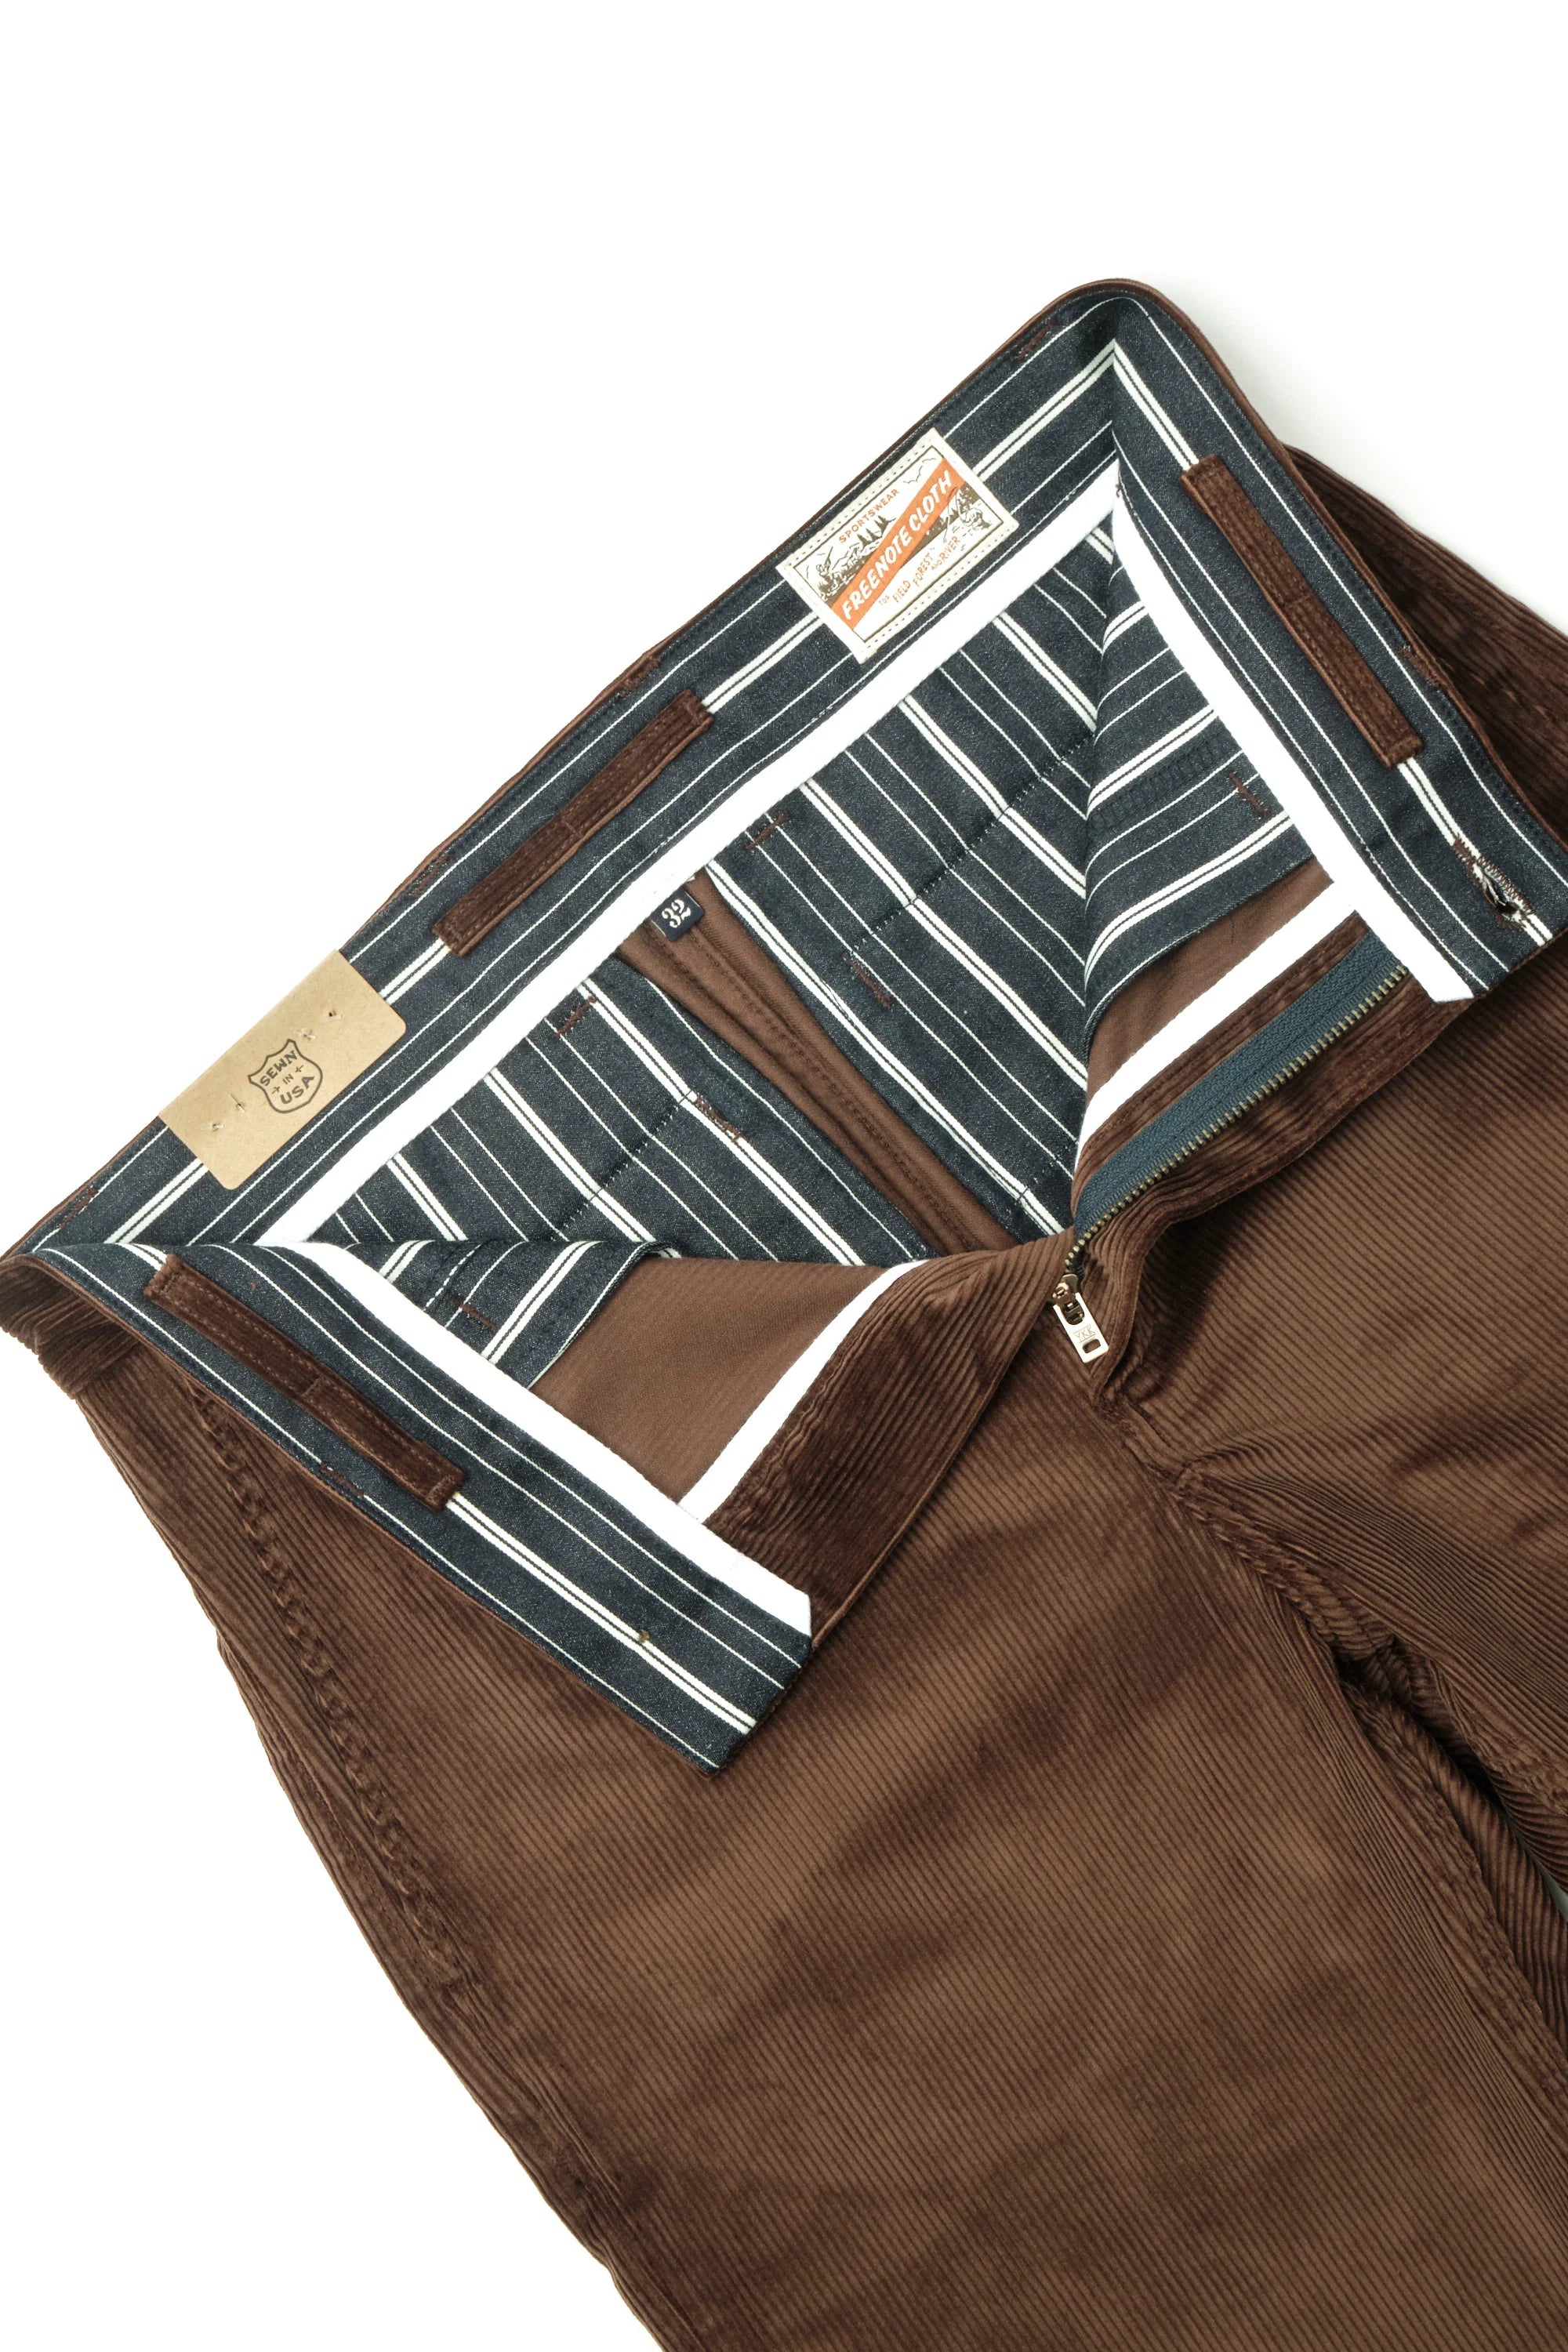 Freenote Cloth Deck Pant - Chocolate Cord